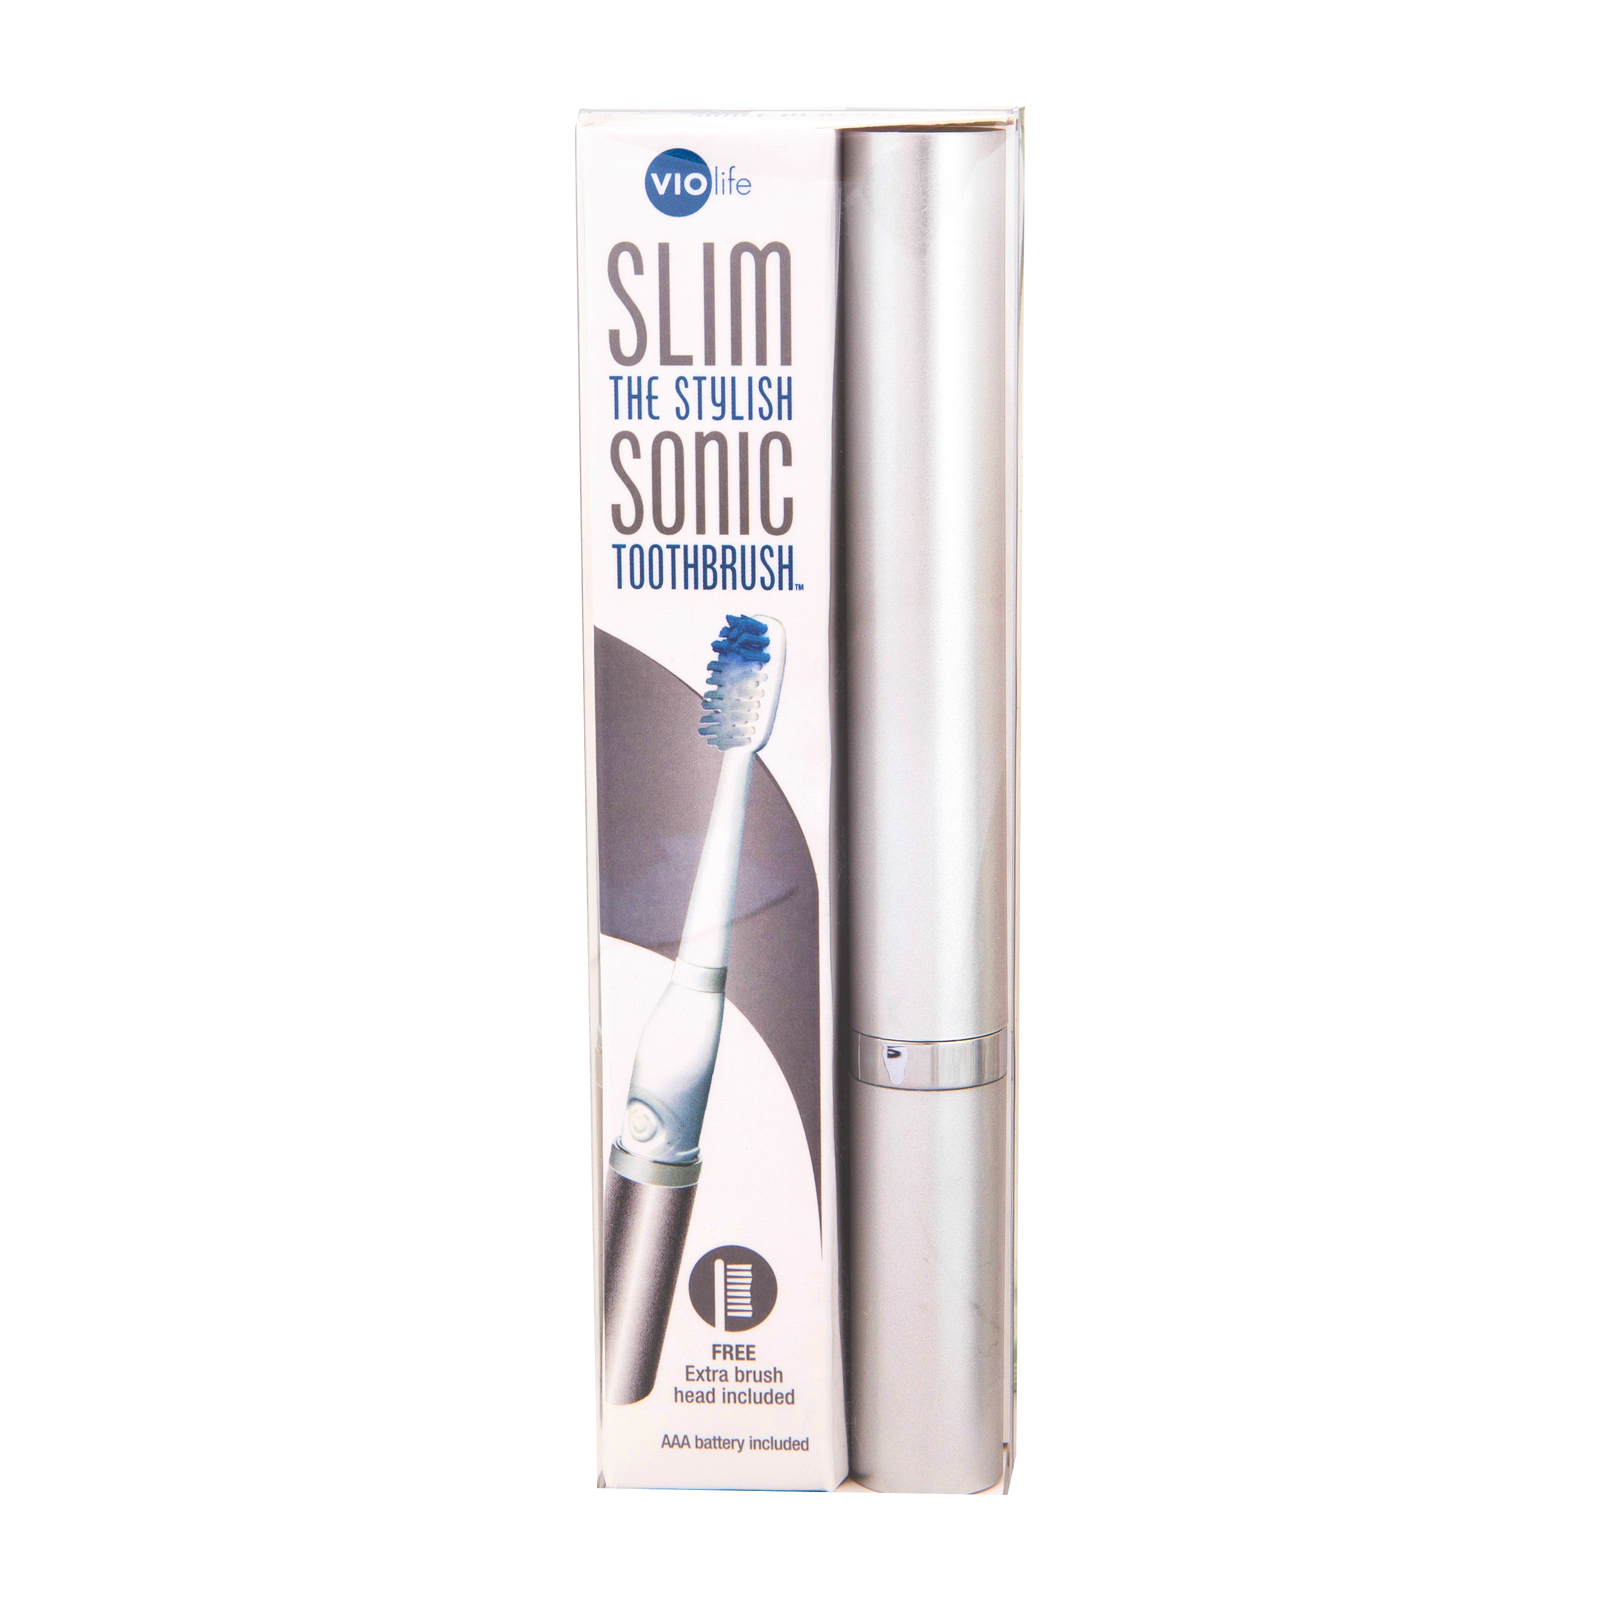 Smile Labs LA: Slim Sonic Tooth Brush (Silver)